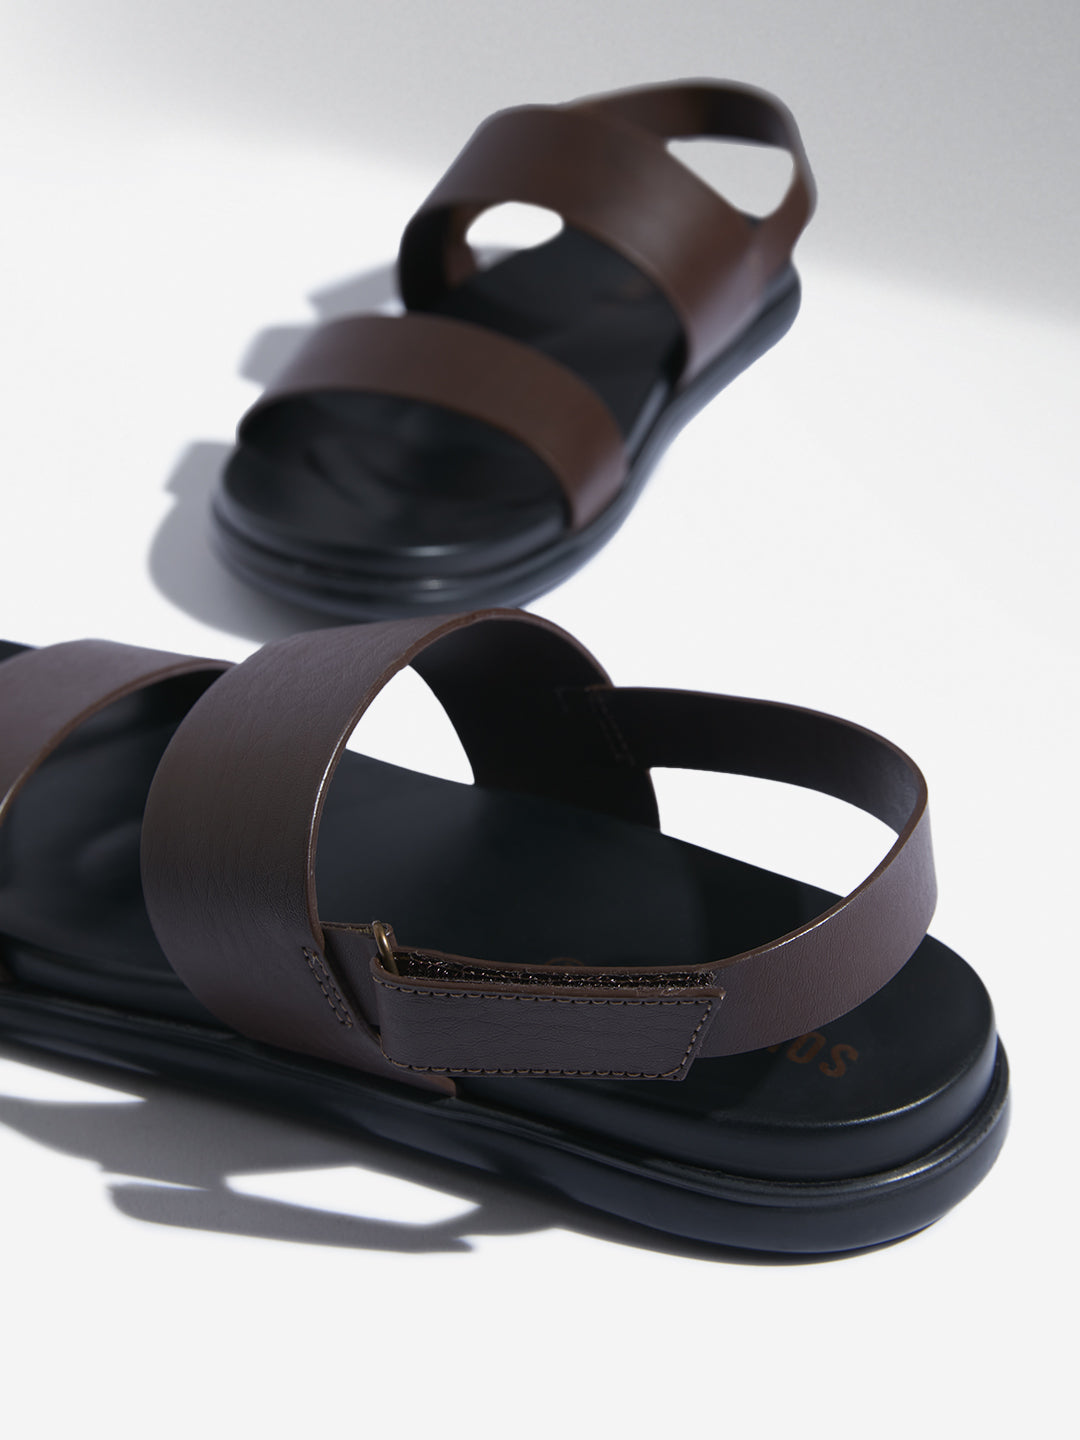 SOLEPLAY Dark Brown Multi-Strap Leather Sandals